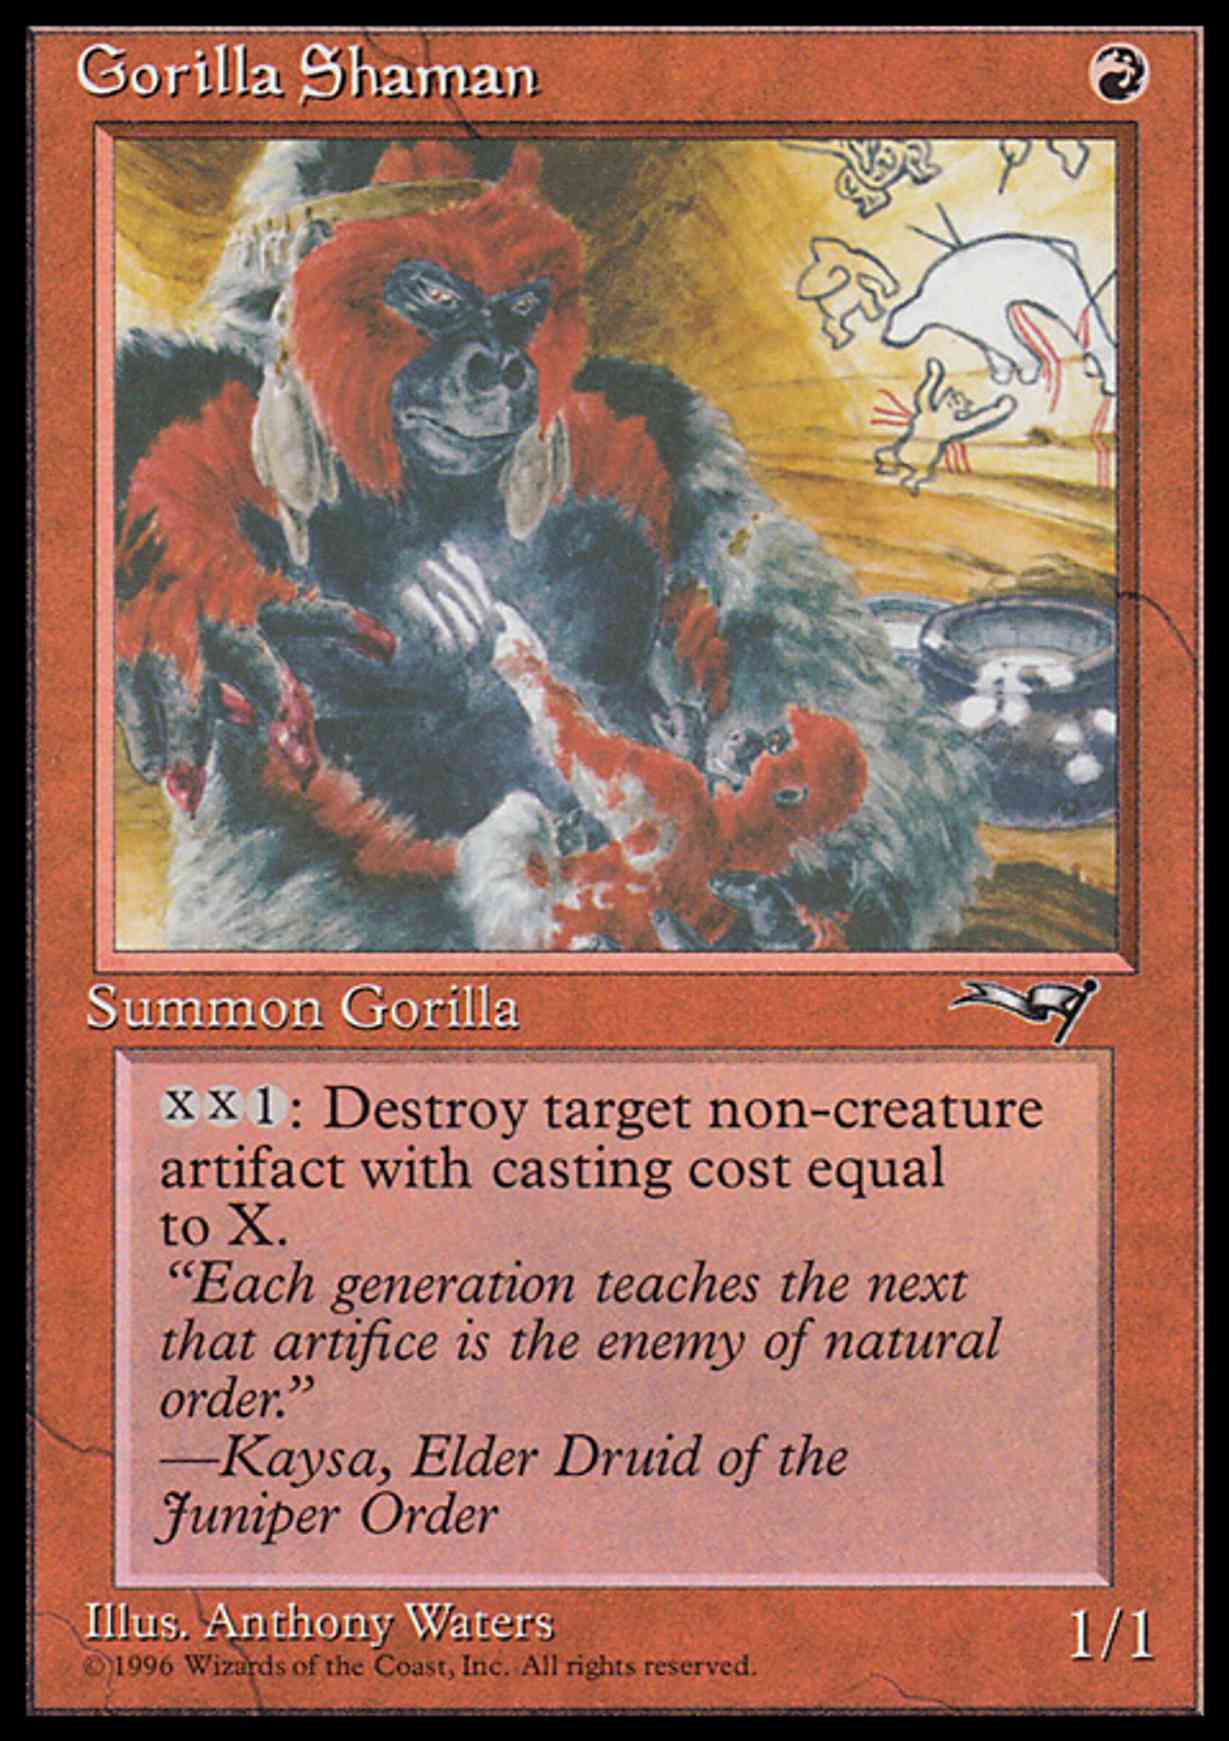 Gorilla Shaman (Holding Baby) magic card front